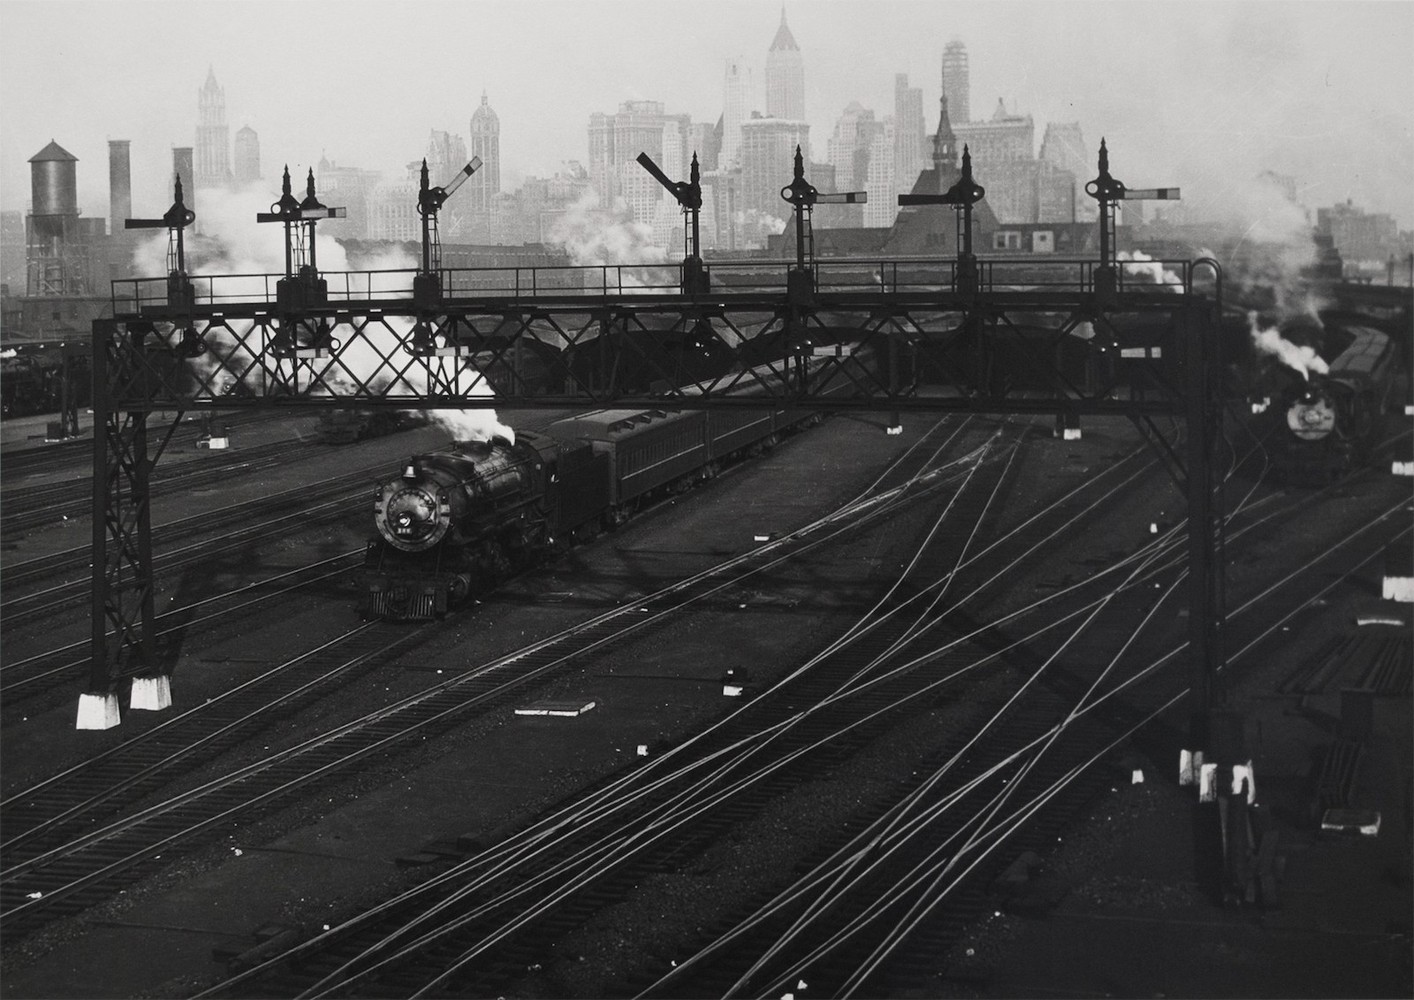 Hoboken railroad yards looking towards Manhattan, 1935